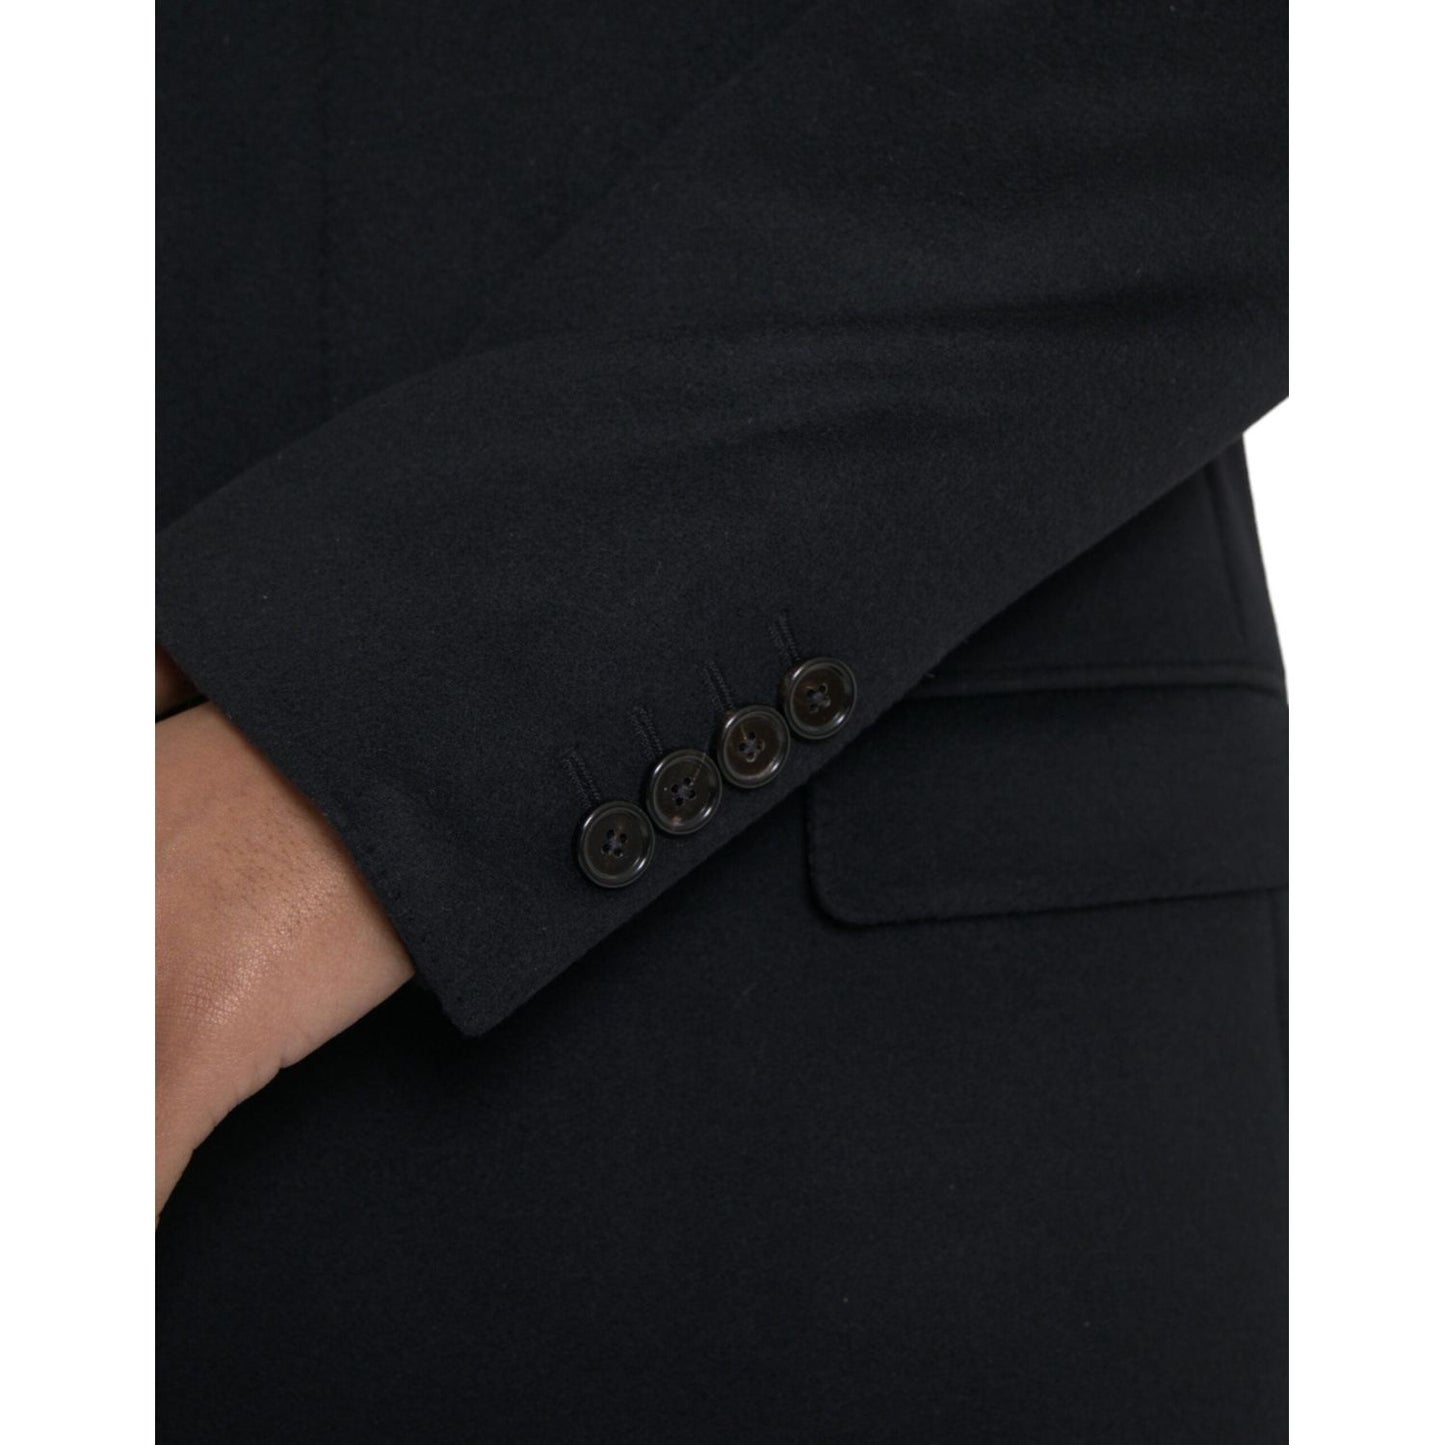 Dolce & Gabbana Black Wool Cashmere Trench Coat Jacket black-wool-cashmere-trench-coat-jacket